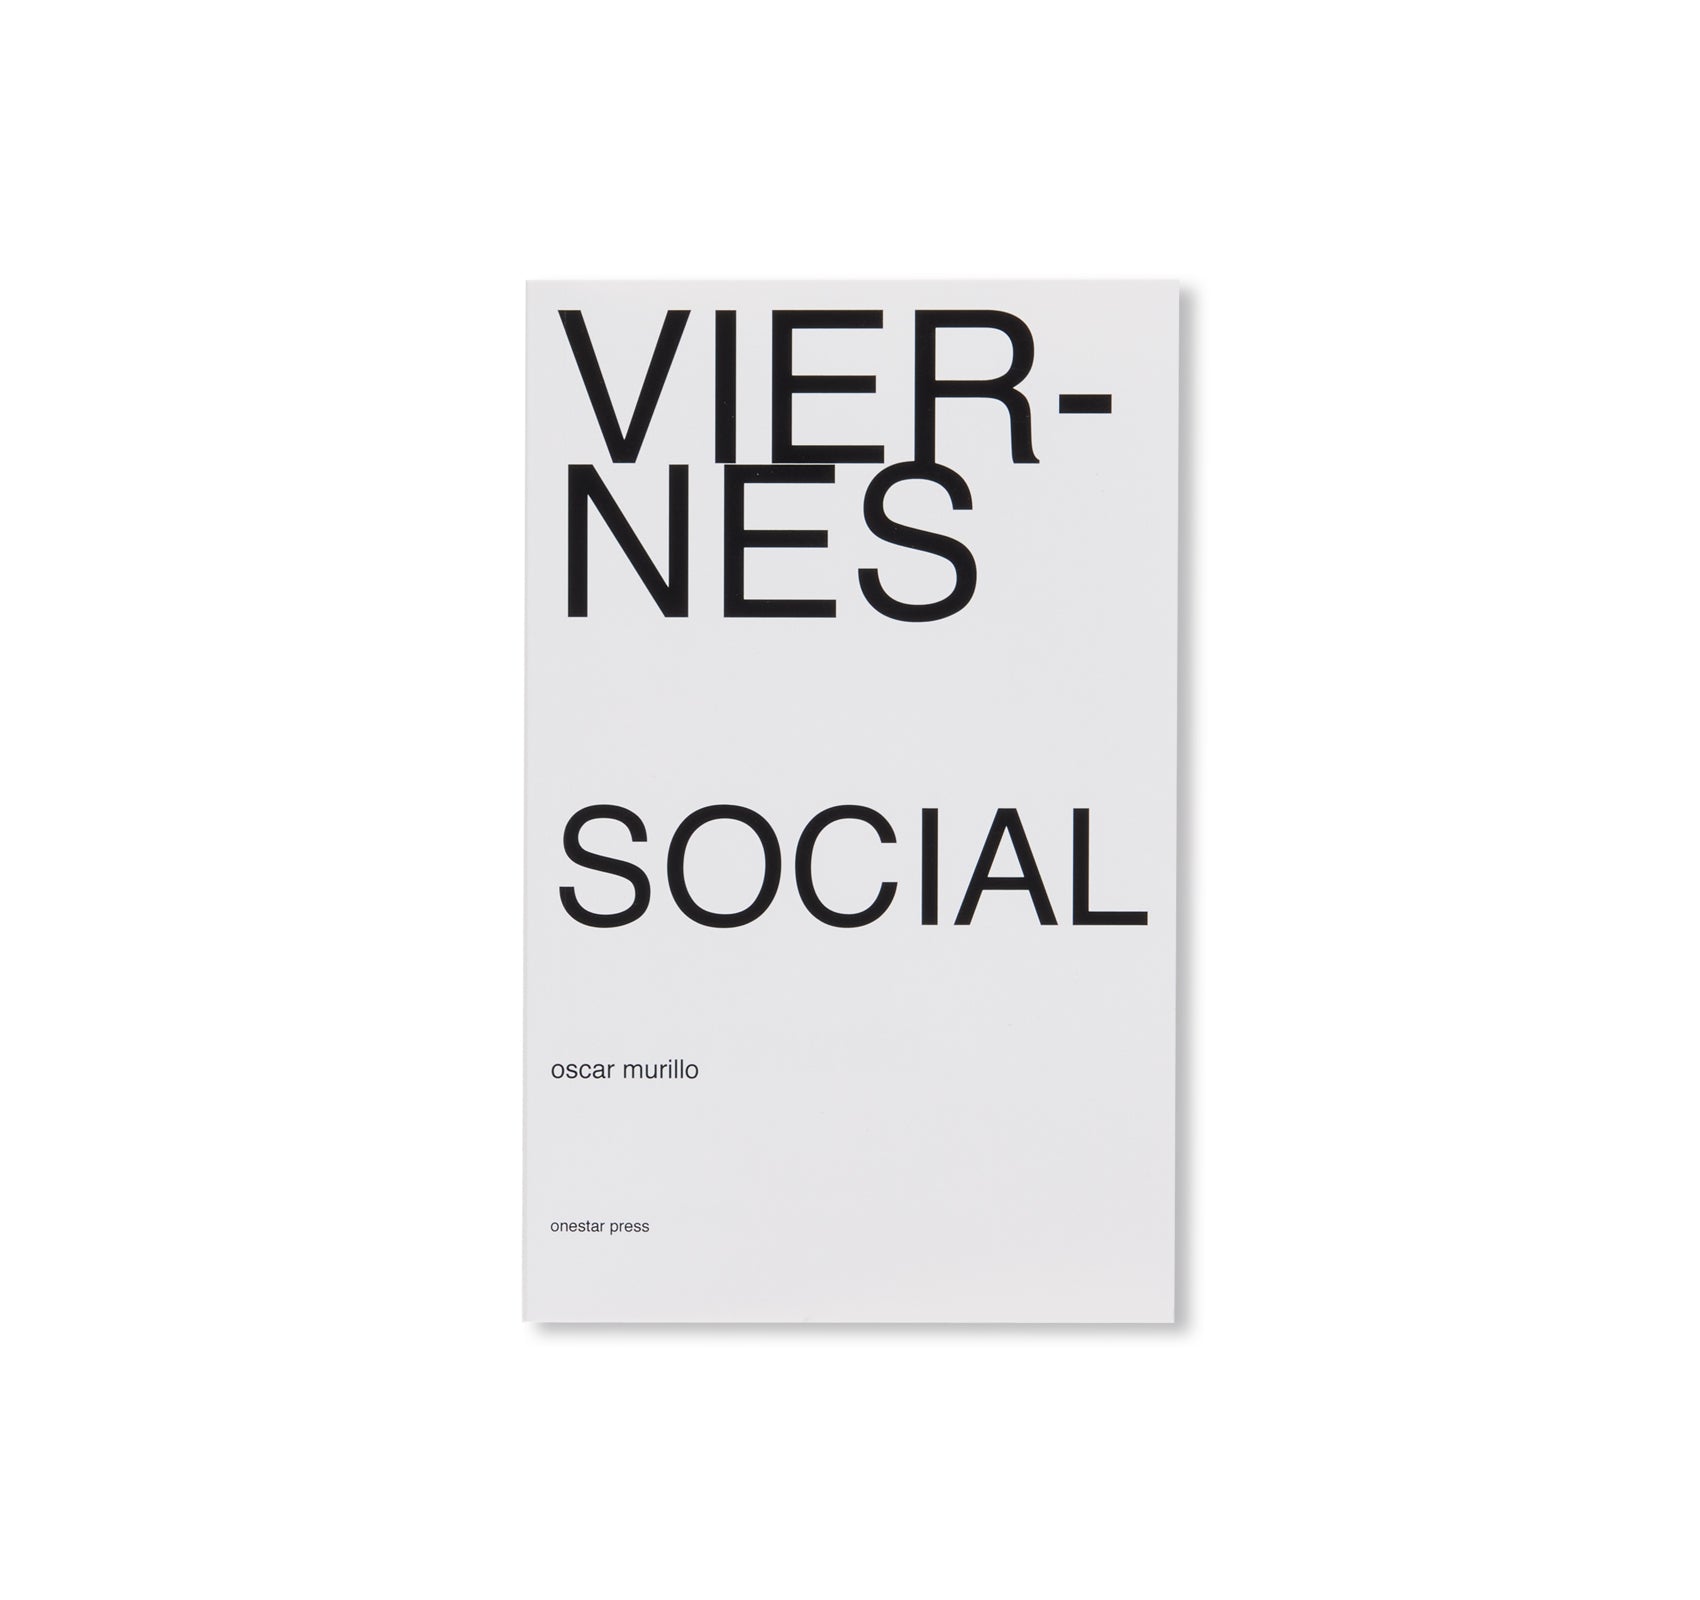 VIERNES SOCIAL by Oscar Murillo